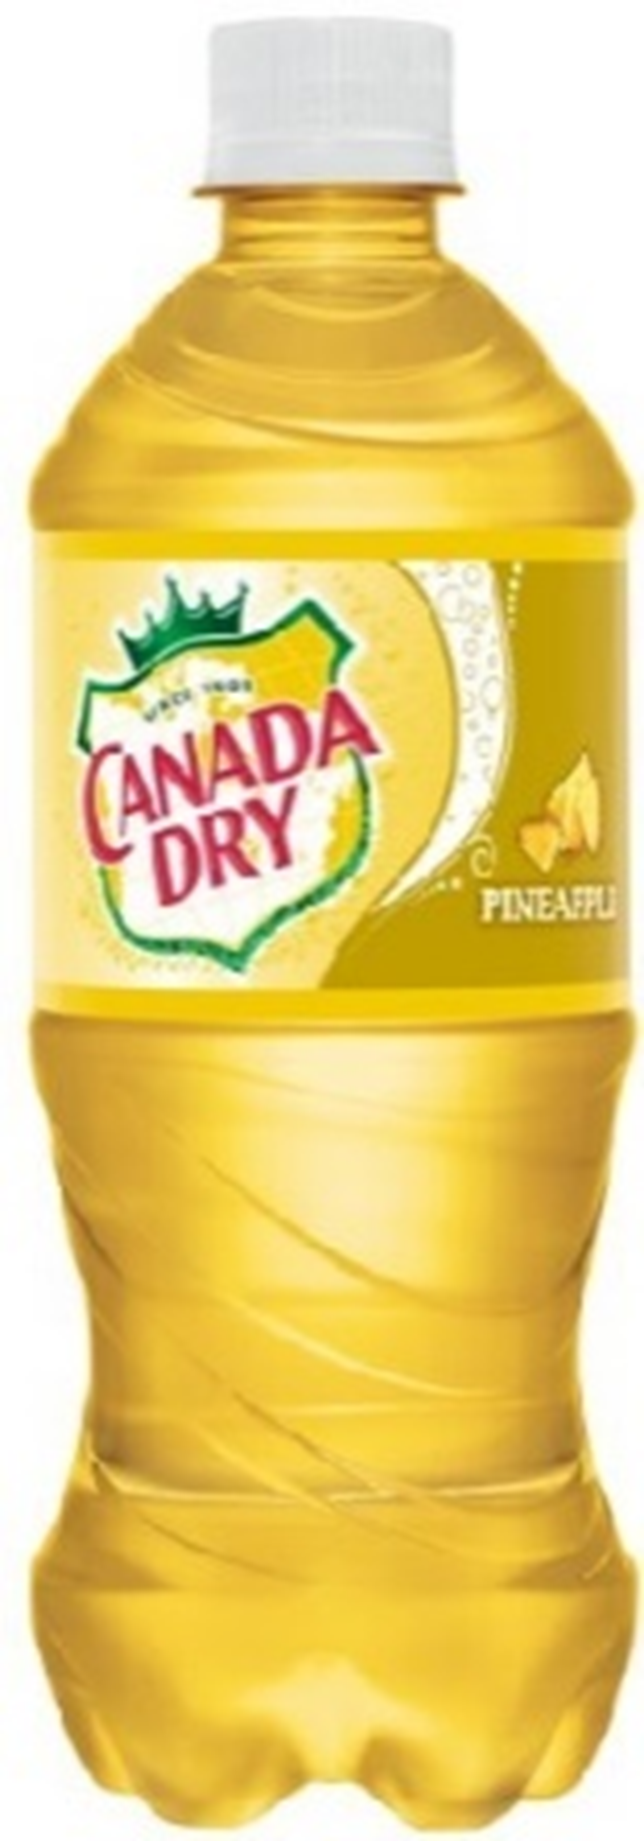 Canada Dry Pineapple Pet Bottle